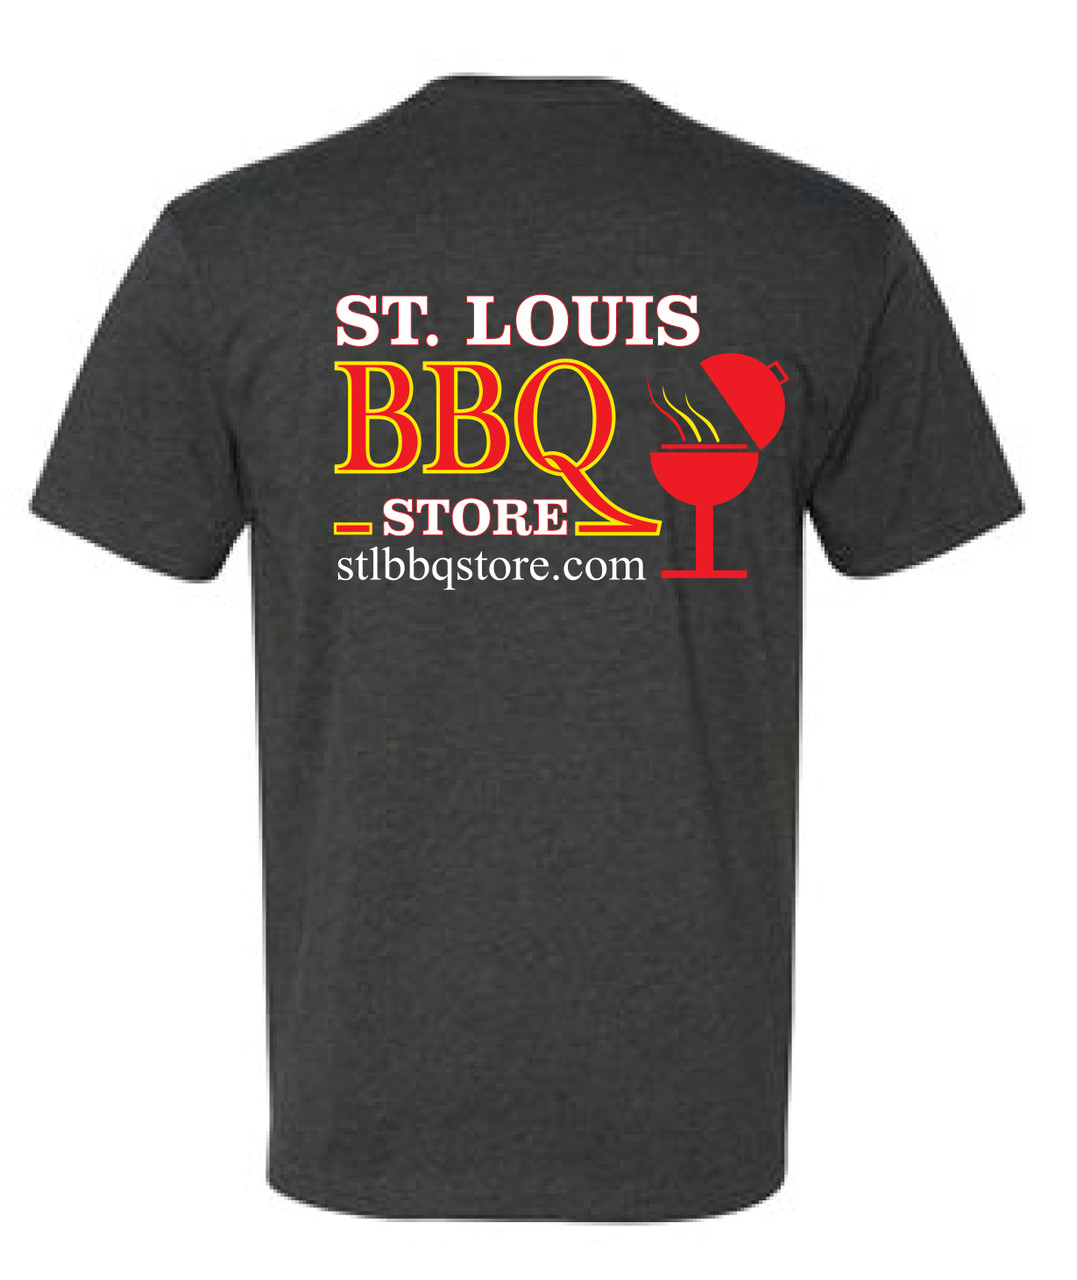 St. Louis BBQ Store T-Shirt